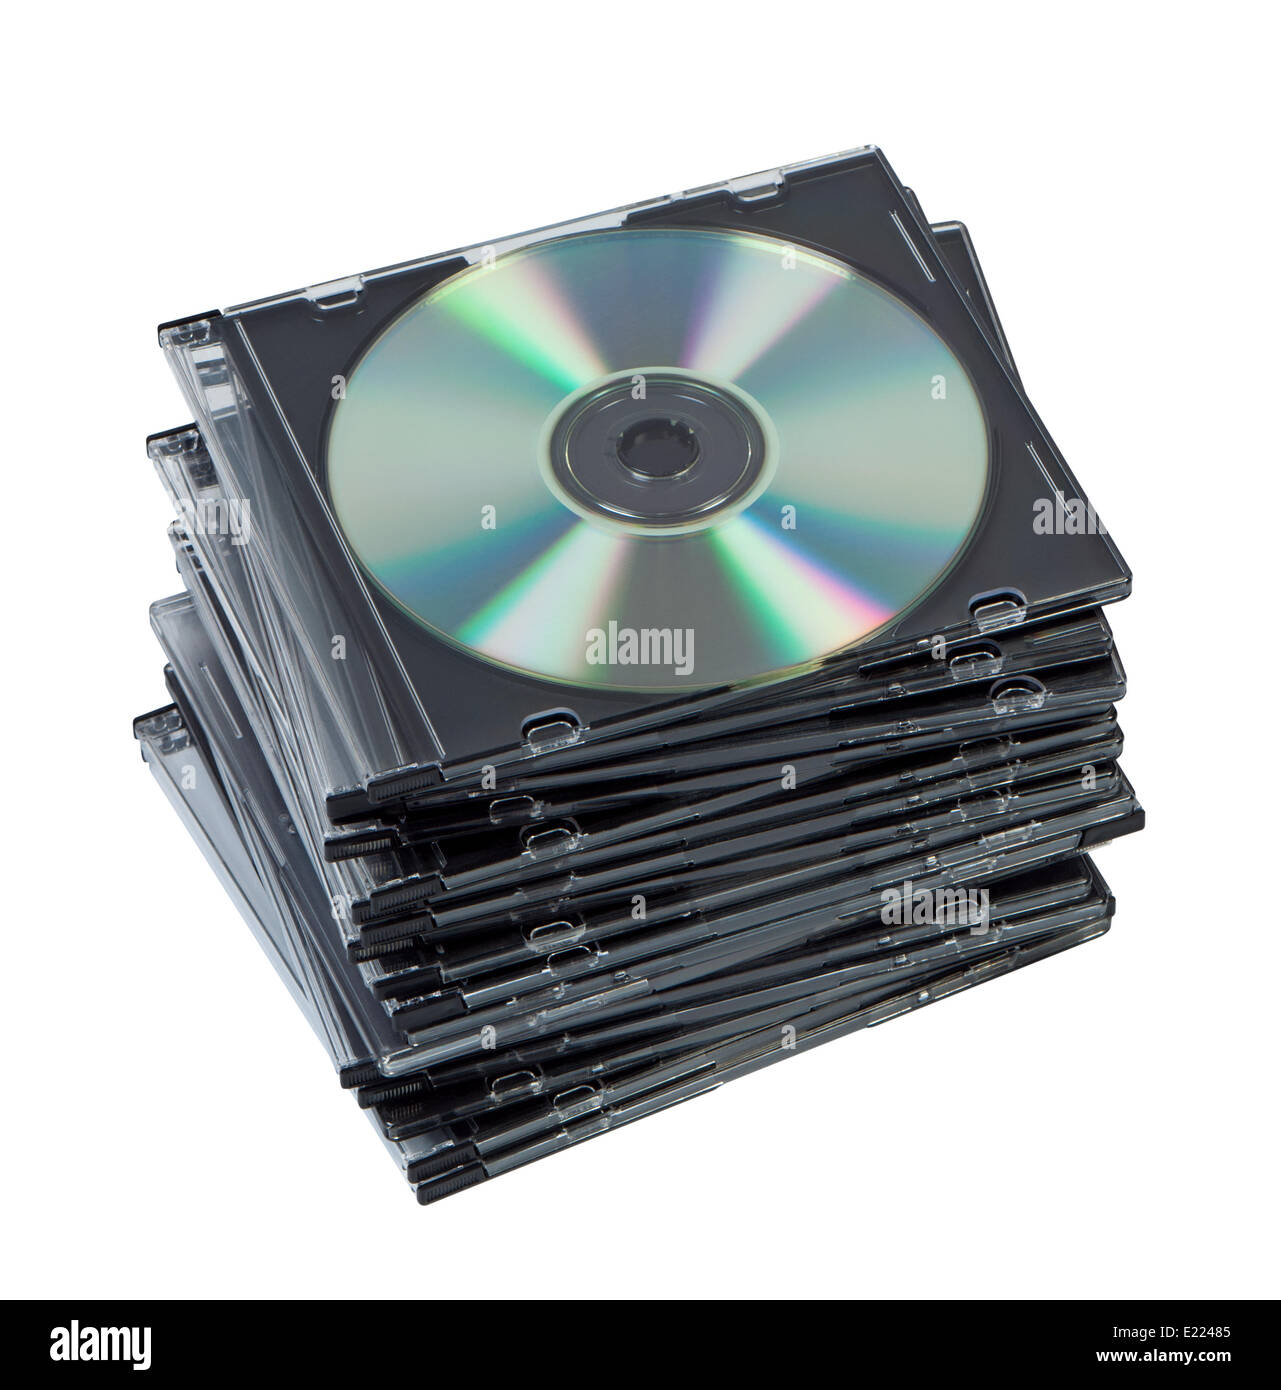 Caja de disco compacto